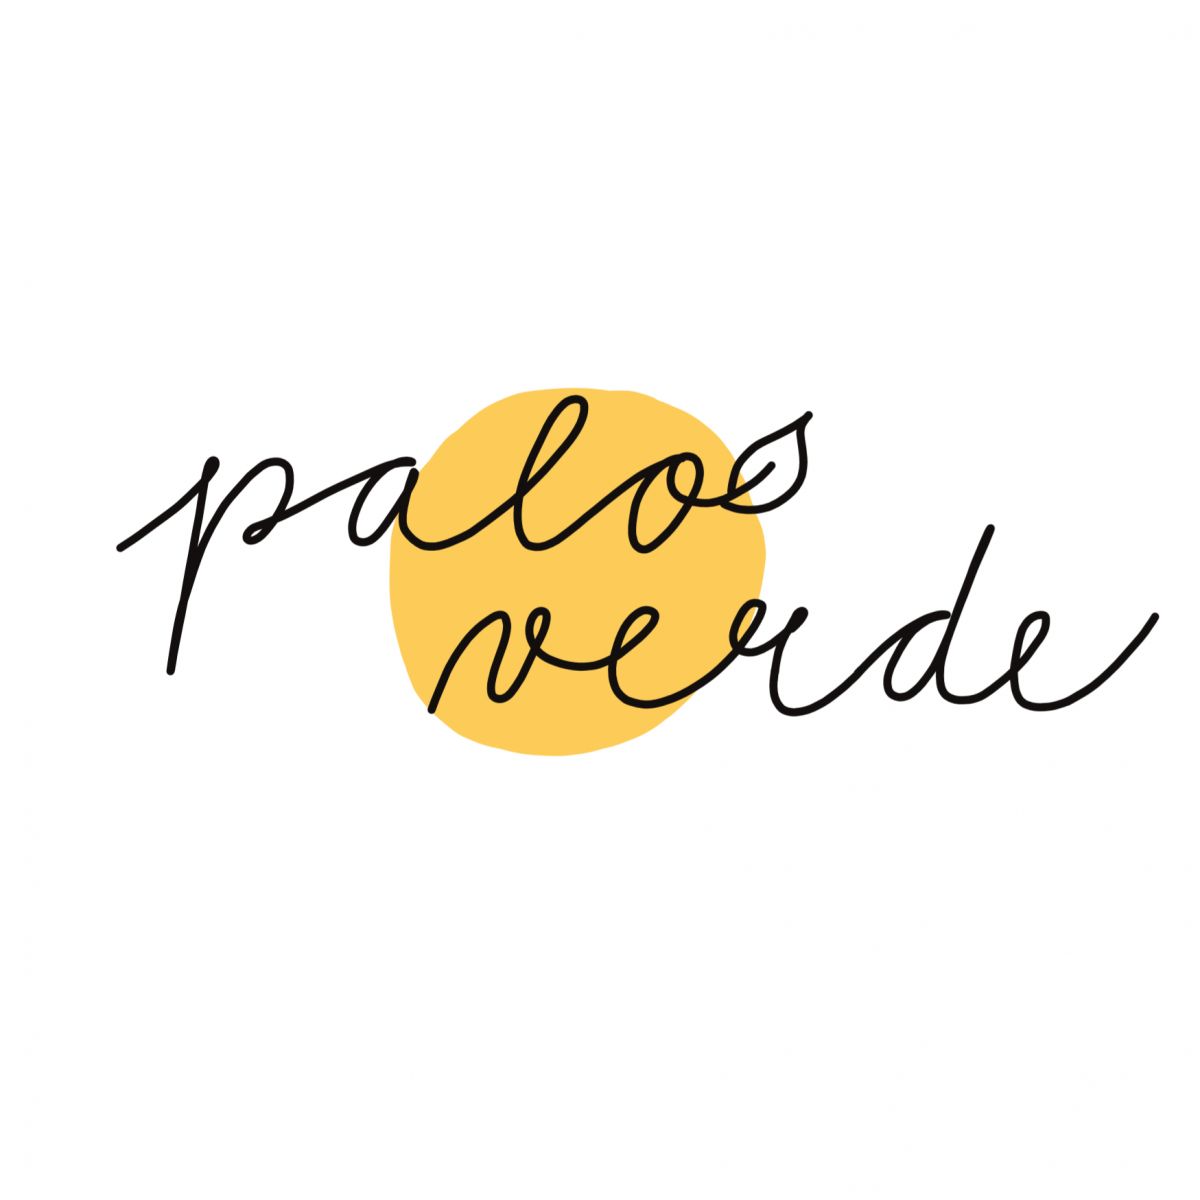 Palo Verde